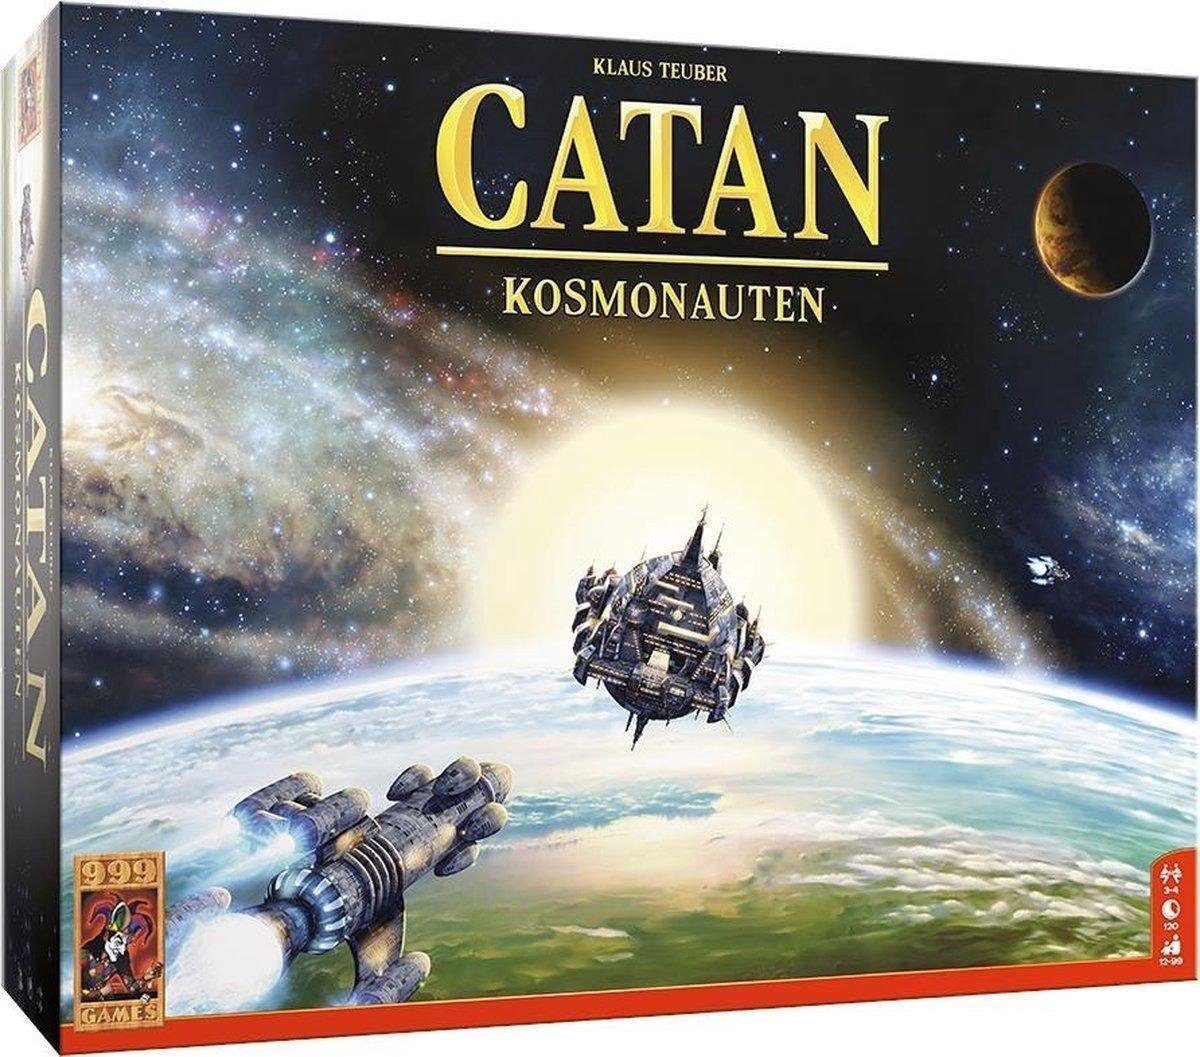 Catan AR game.